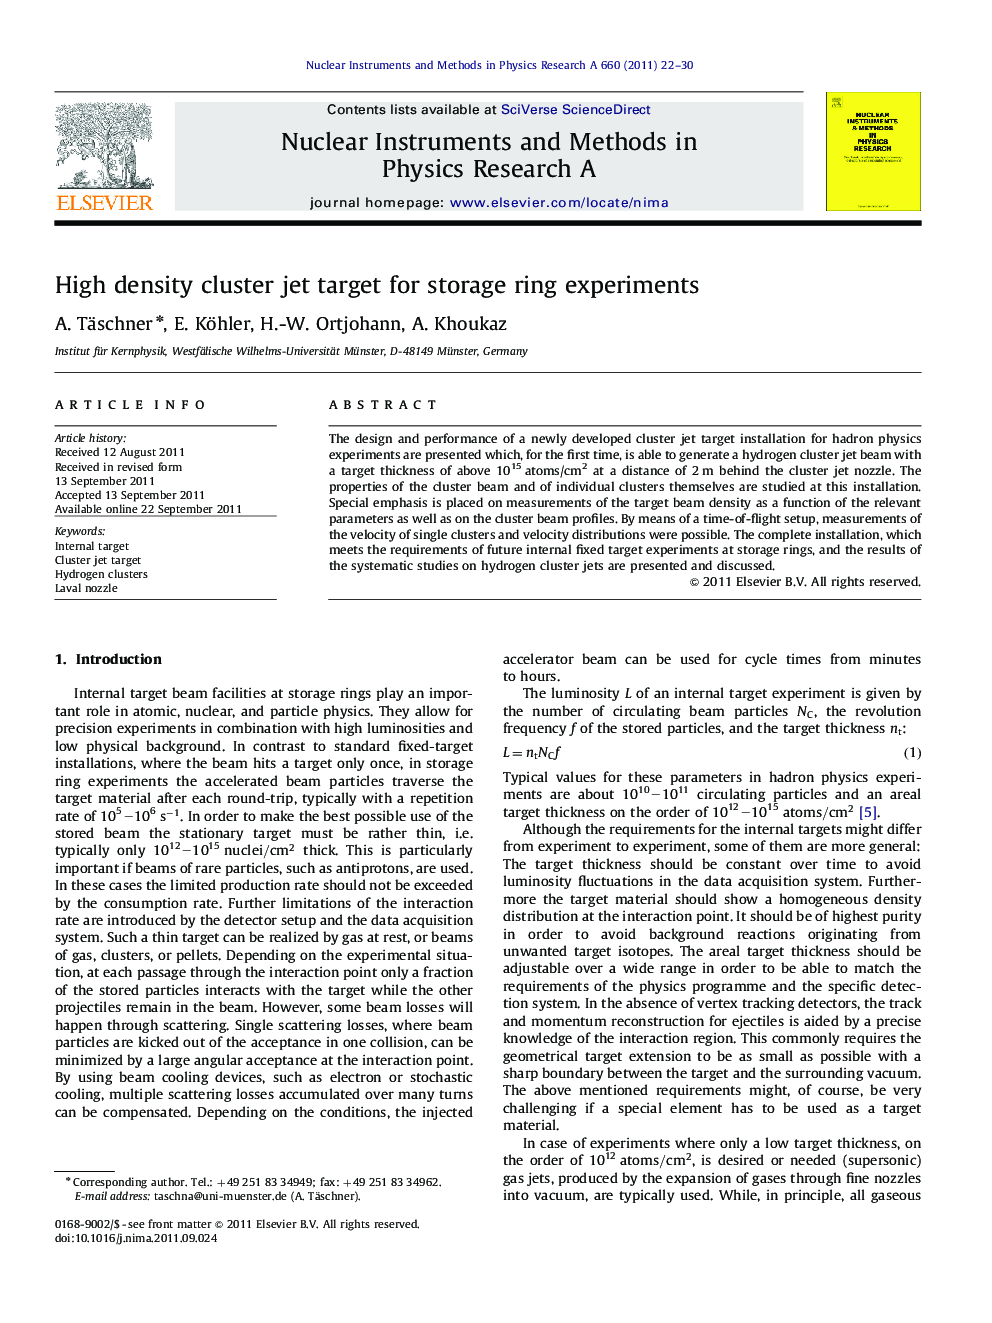 High density cluster jet target for storage ring experiments